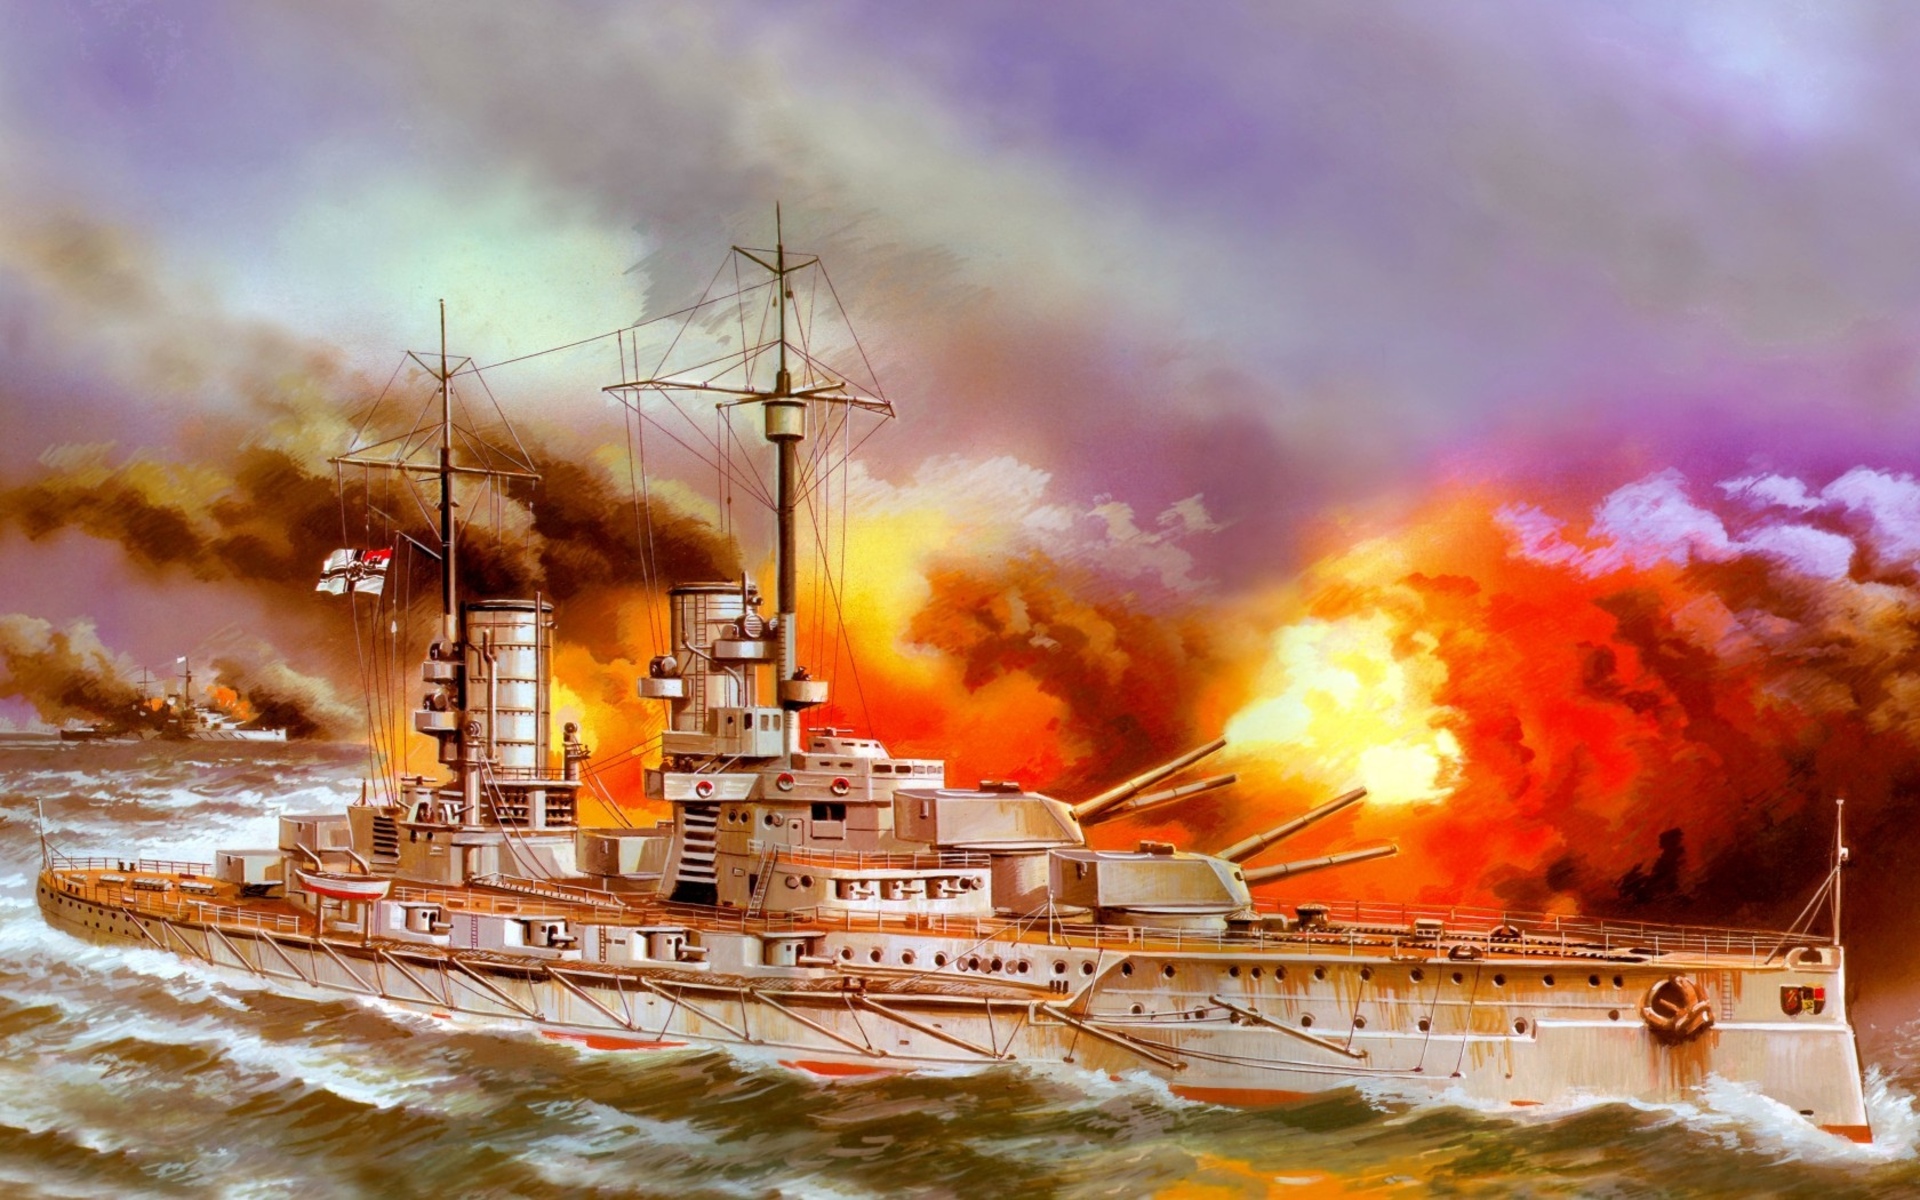 General 1920x1200 Battleships Battle of Jutland artwork ship vehicle military vehicle military warship